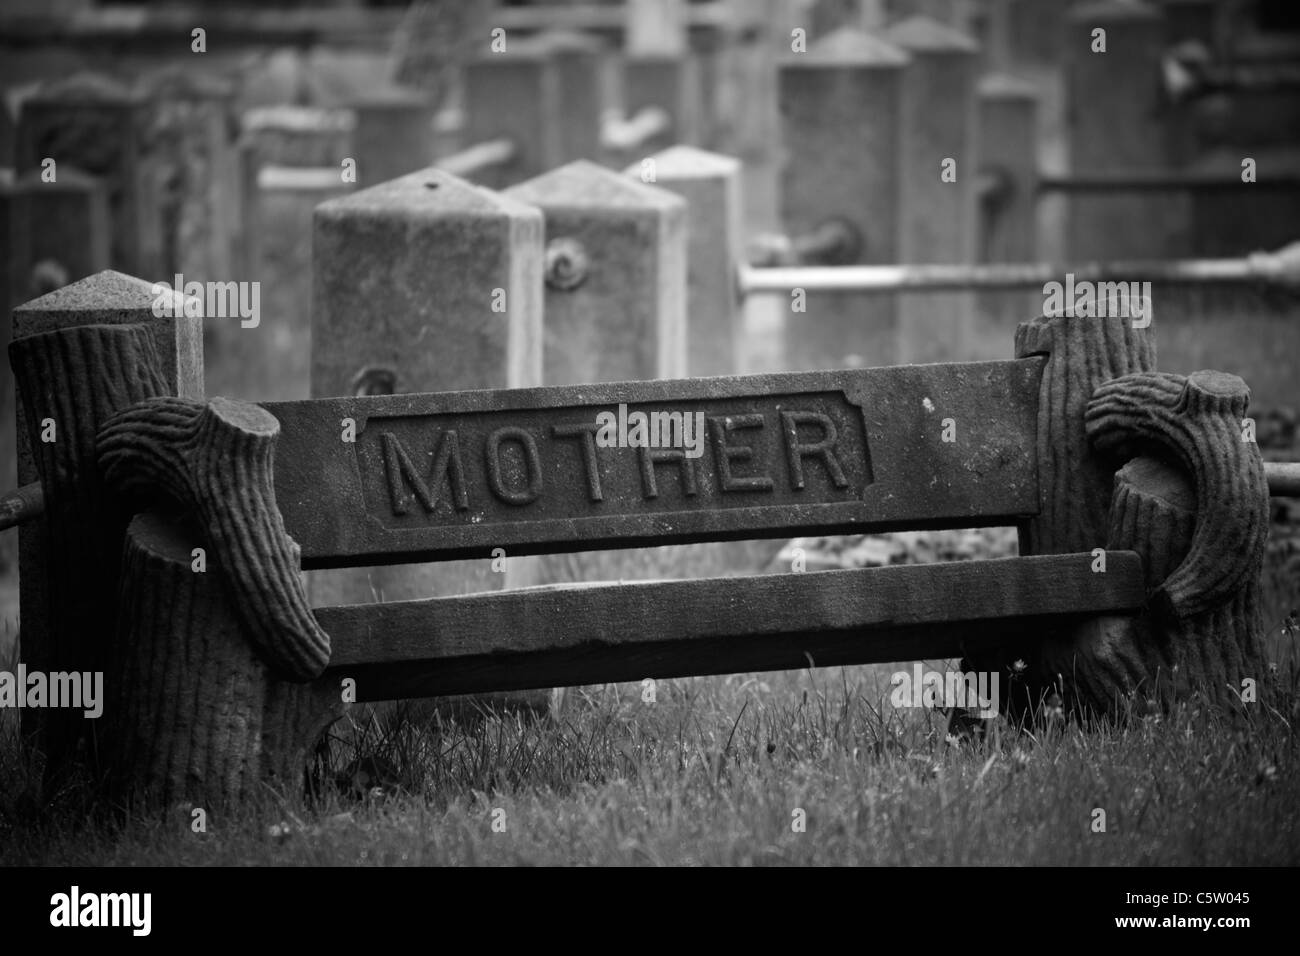 USA, New York, Manhattan, Jewish Cemetery, Gravestone, close-up Stock Photo